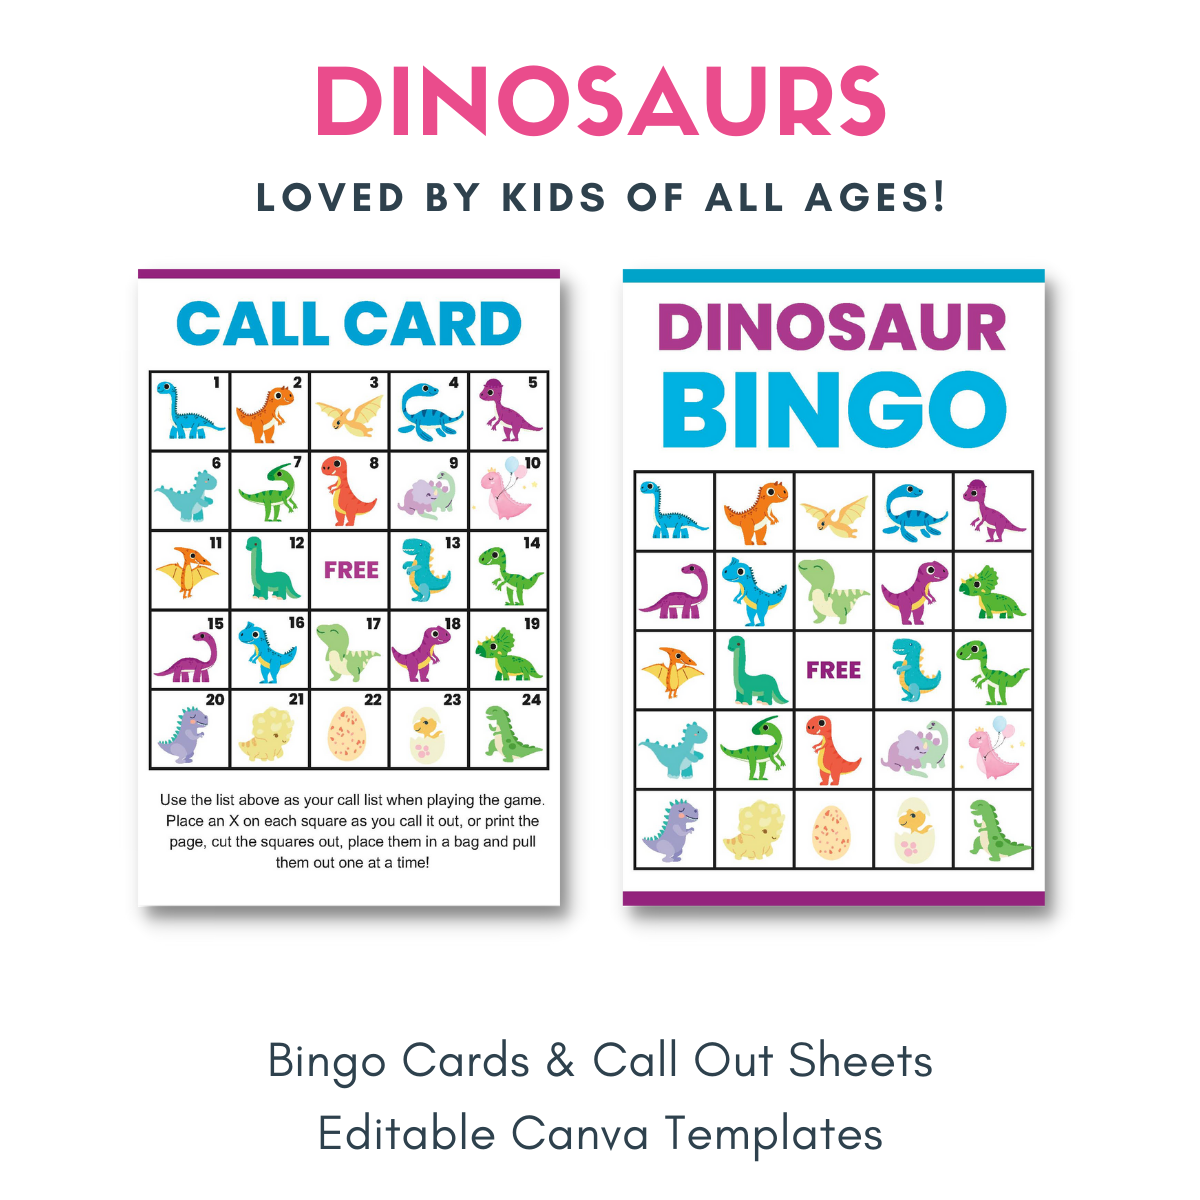 Bingo Party: 15 Printable Packs